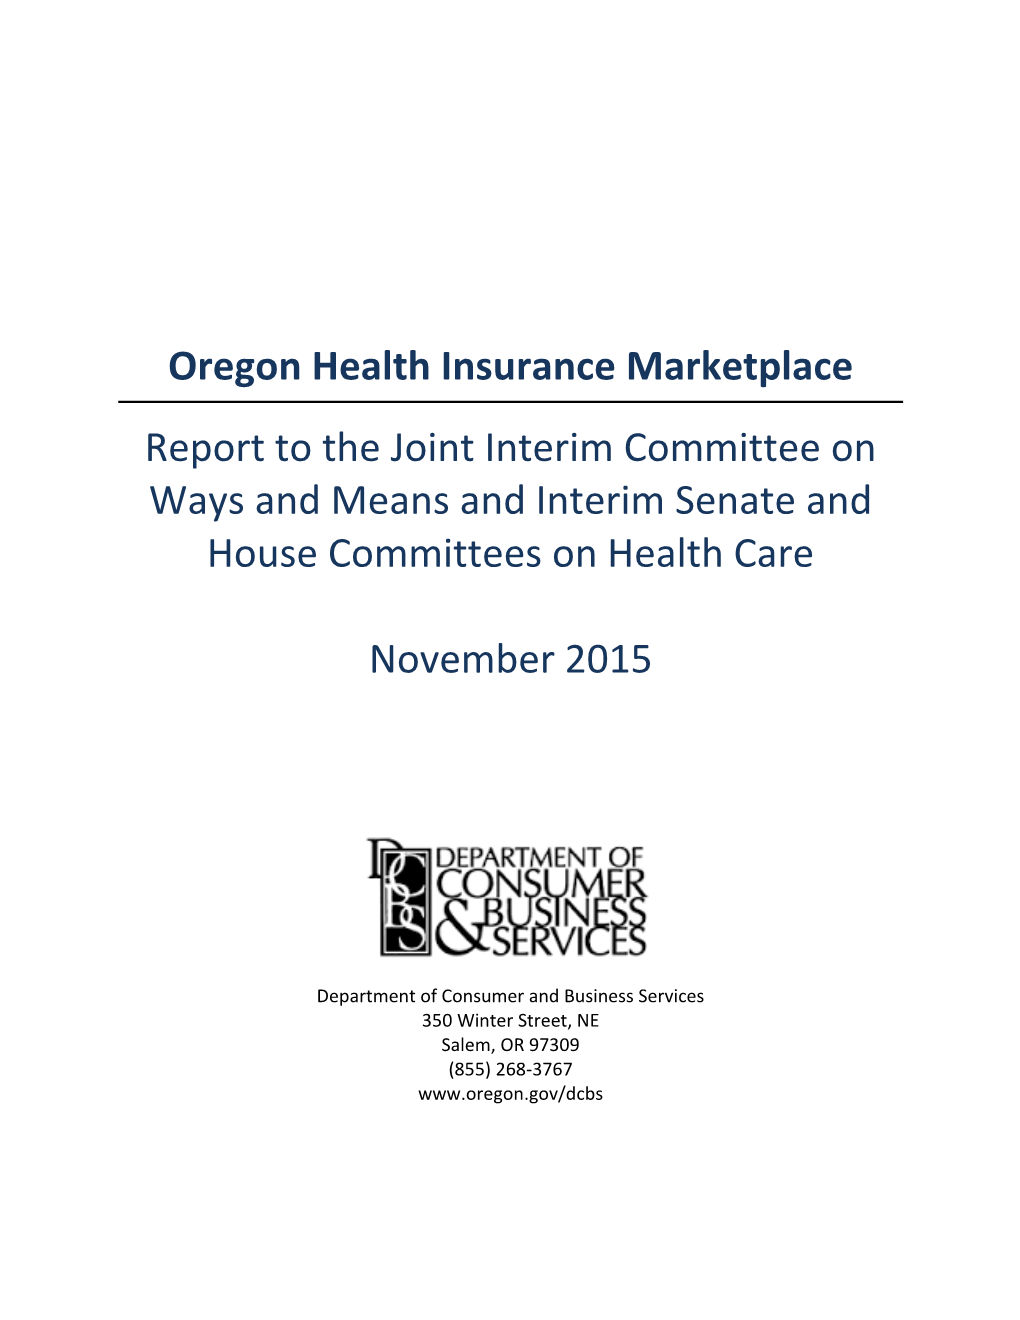 November 2015 Marketplace Legislative Report